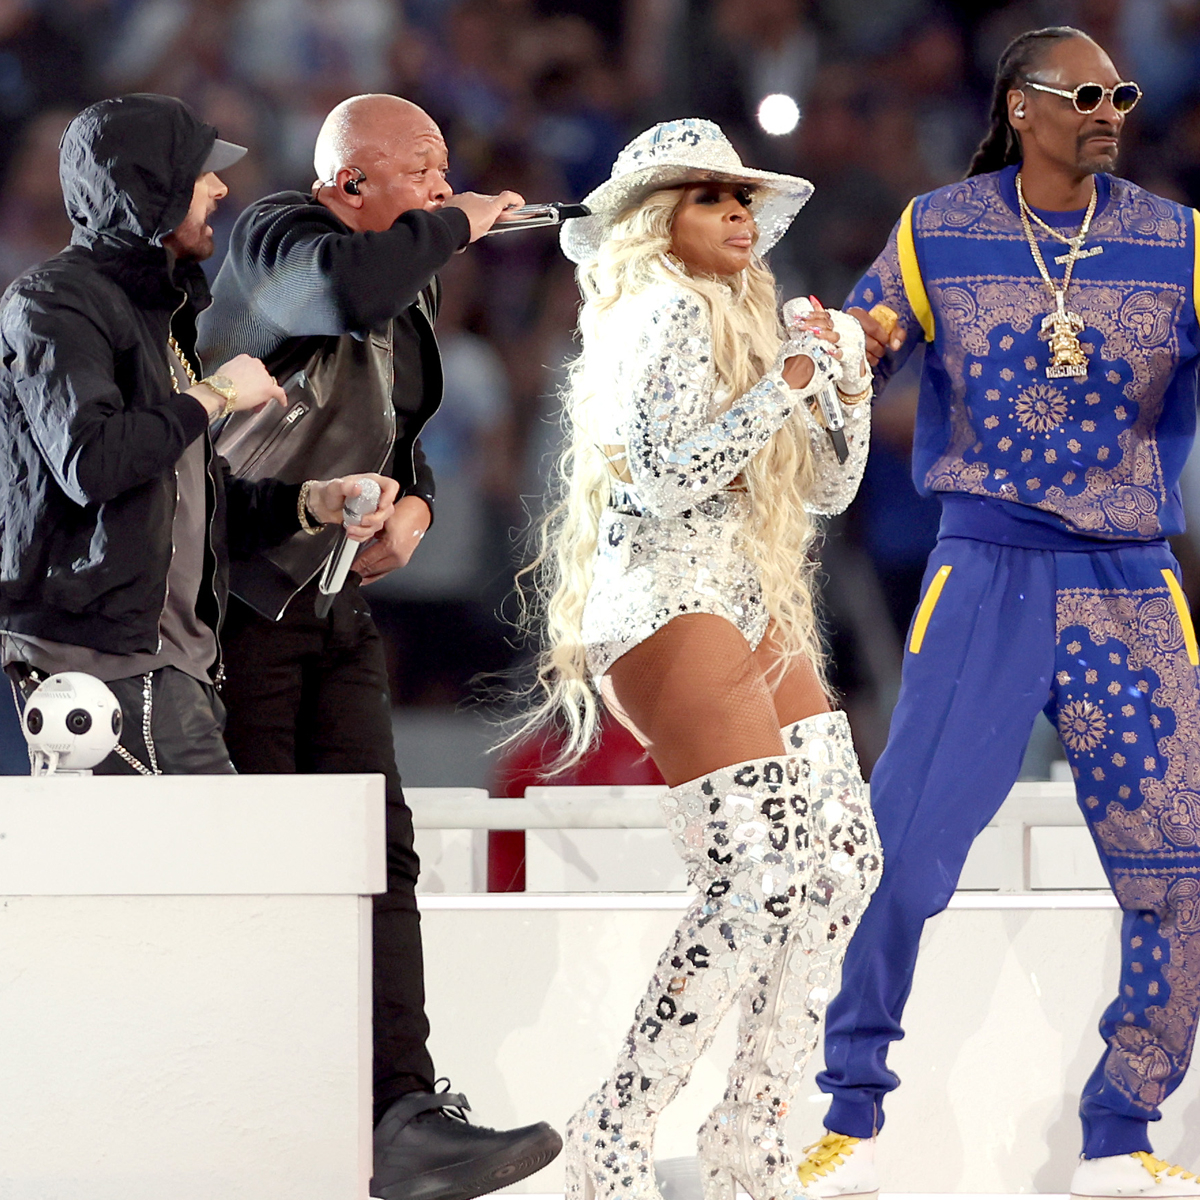 Super Bowl Halftime Show In 2022 To Feature Dre, Snoop, Eminem, Blige,  Lamar : NPR